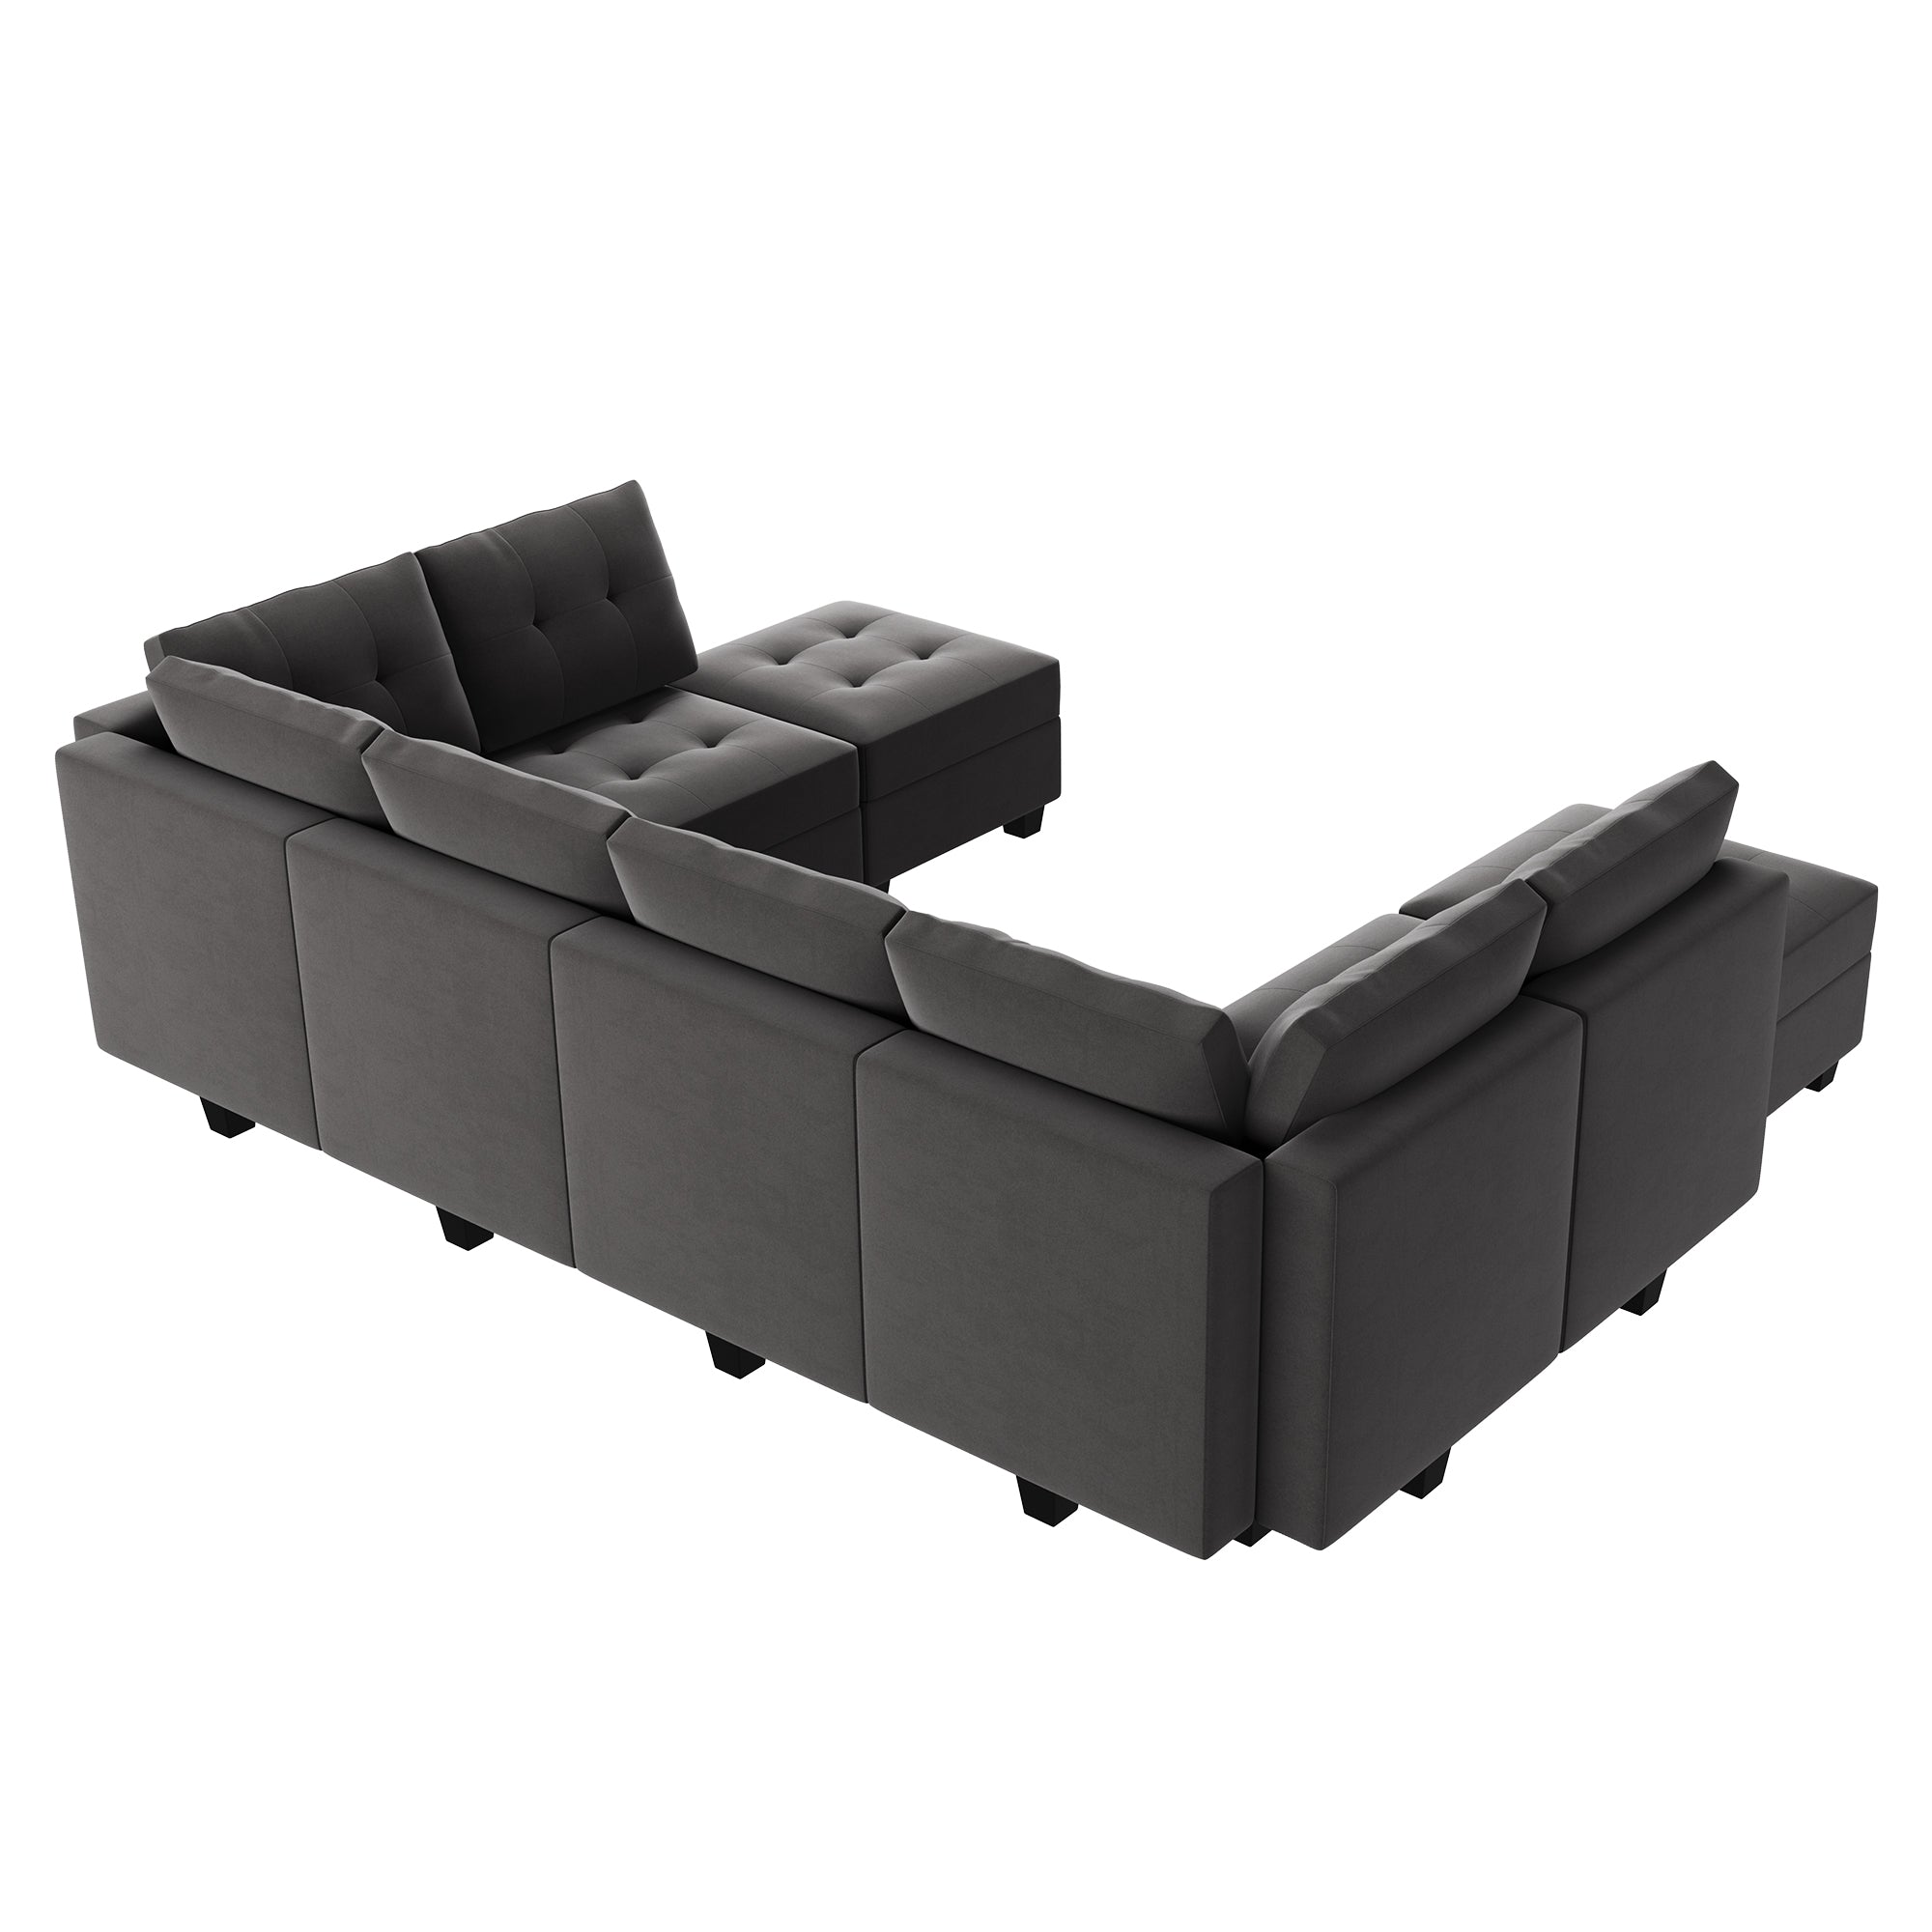 HONBAY Tufted Modular Sofa 8-Seat with Storage Seater